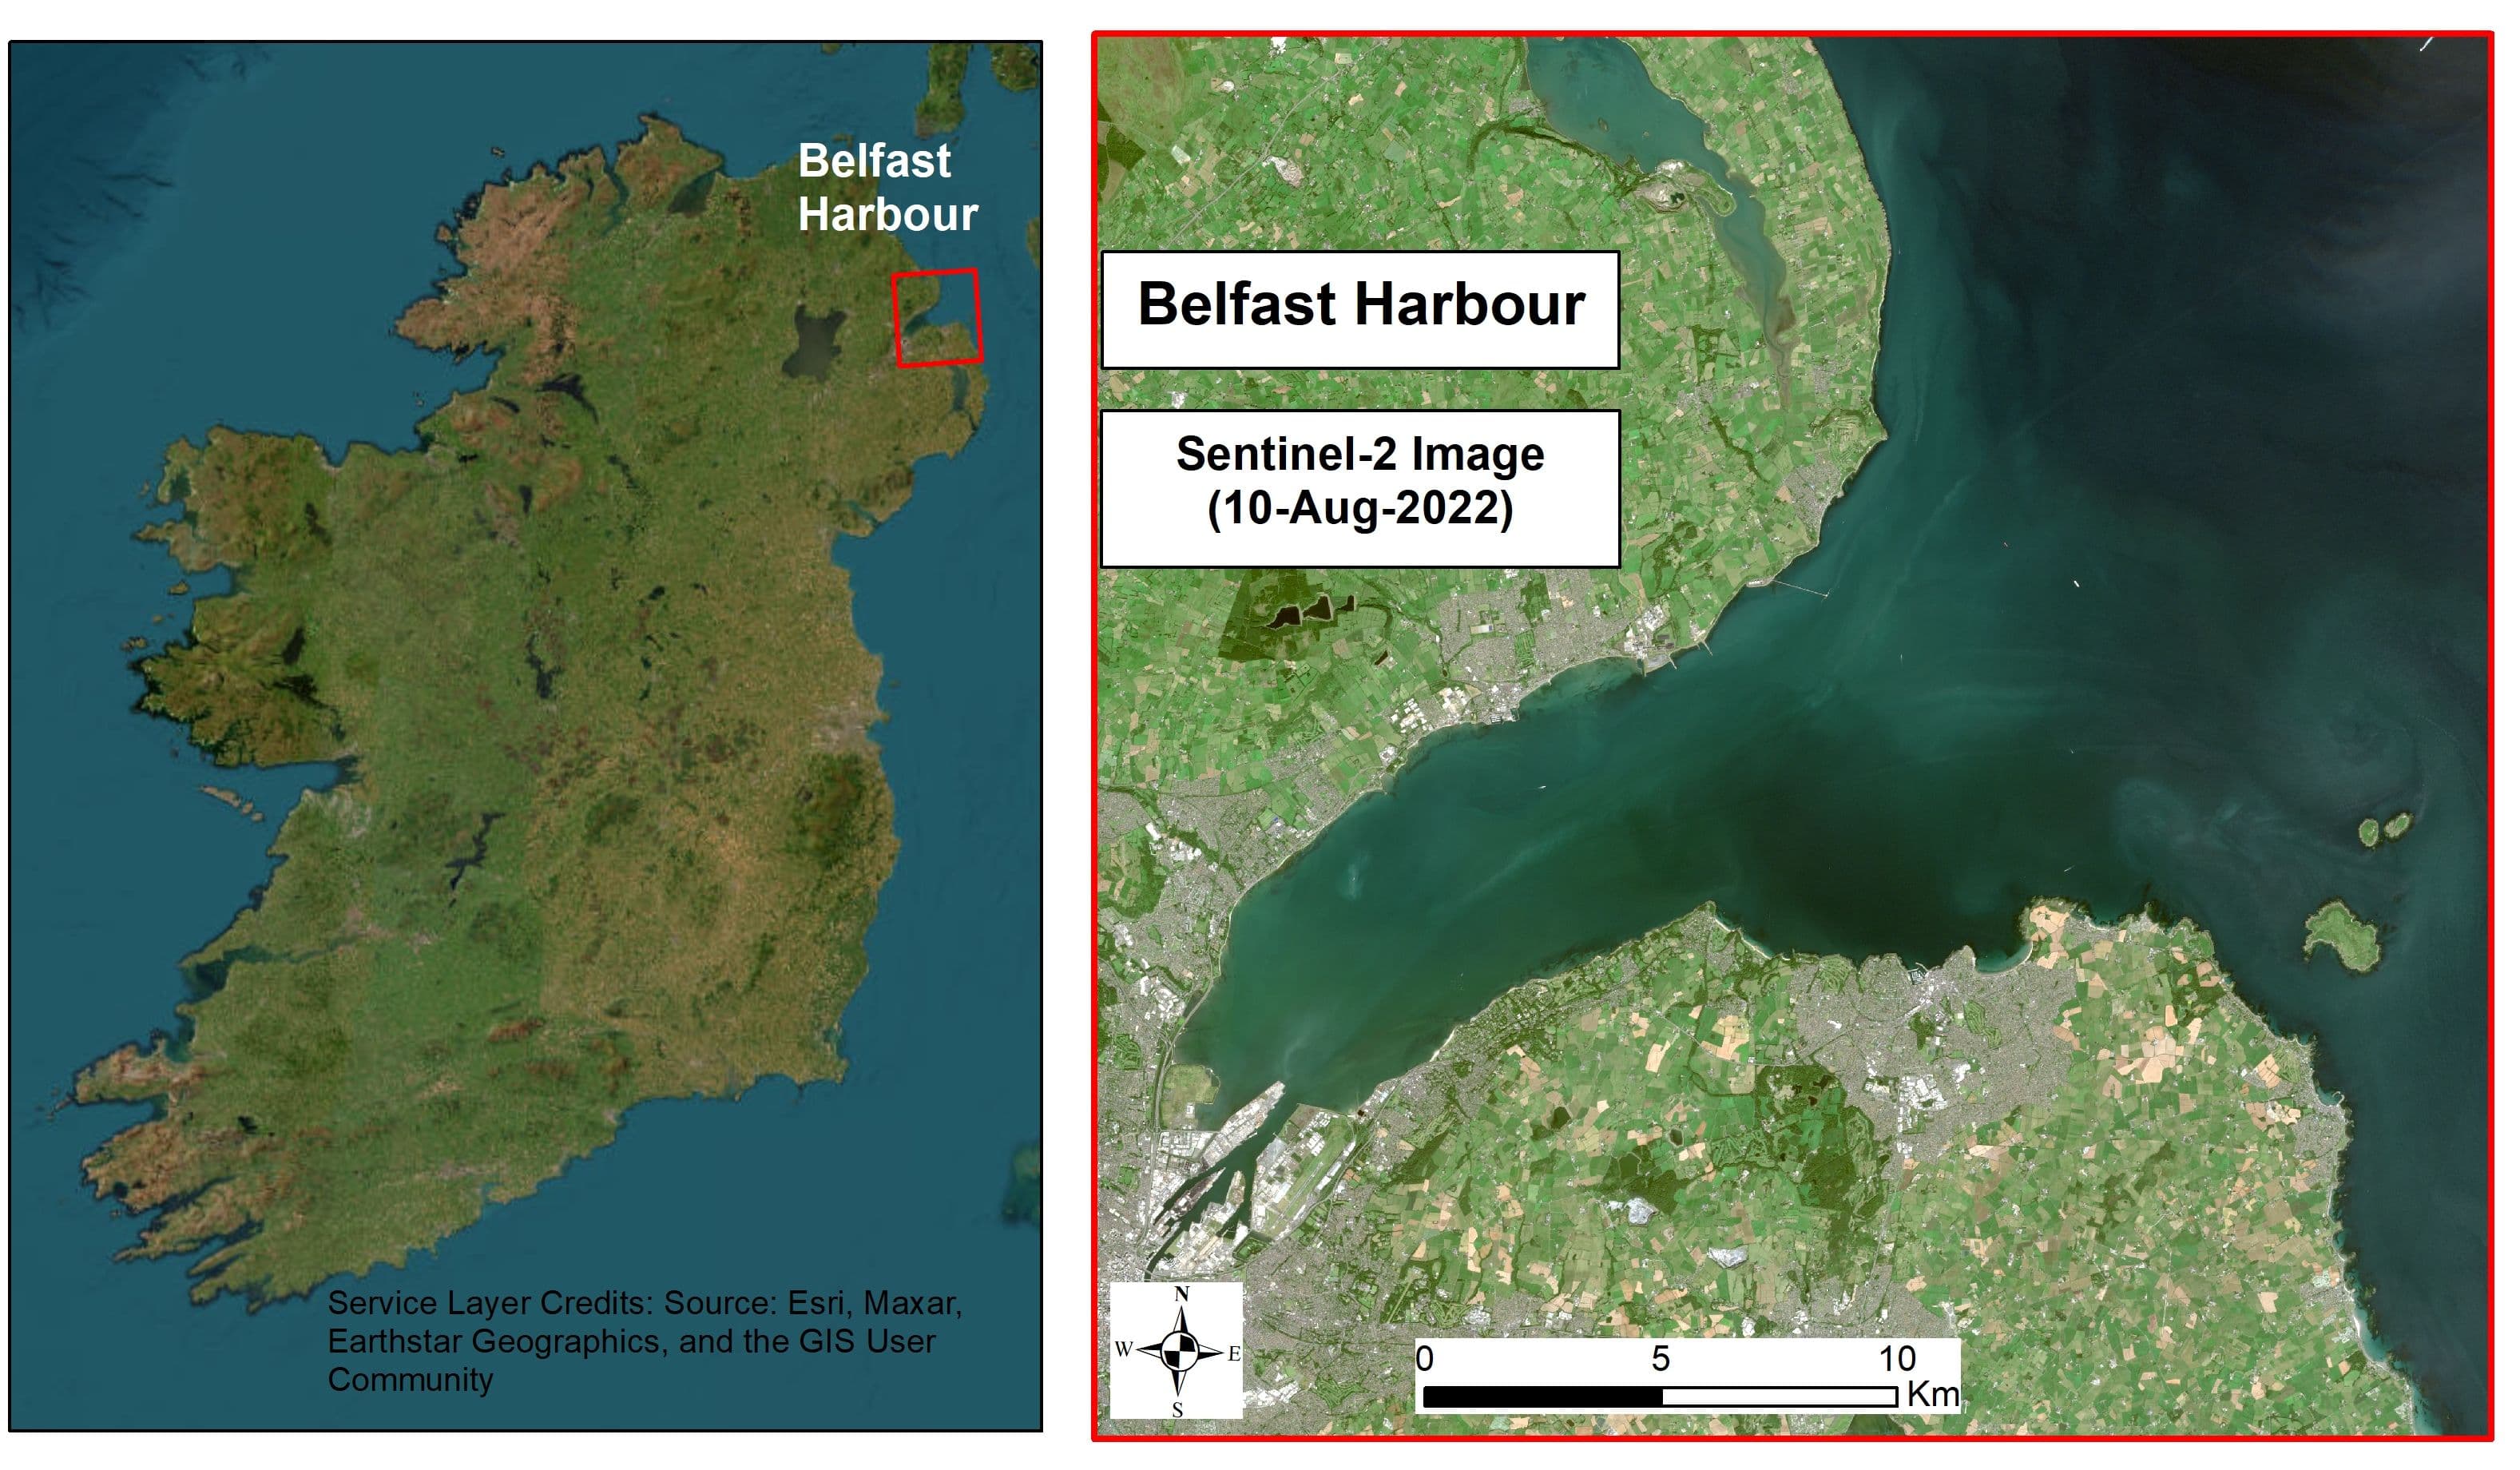 Belfast Harbour Satellite Imagery